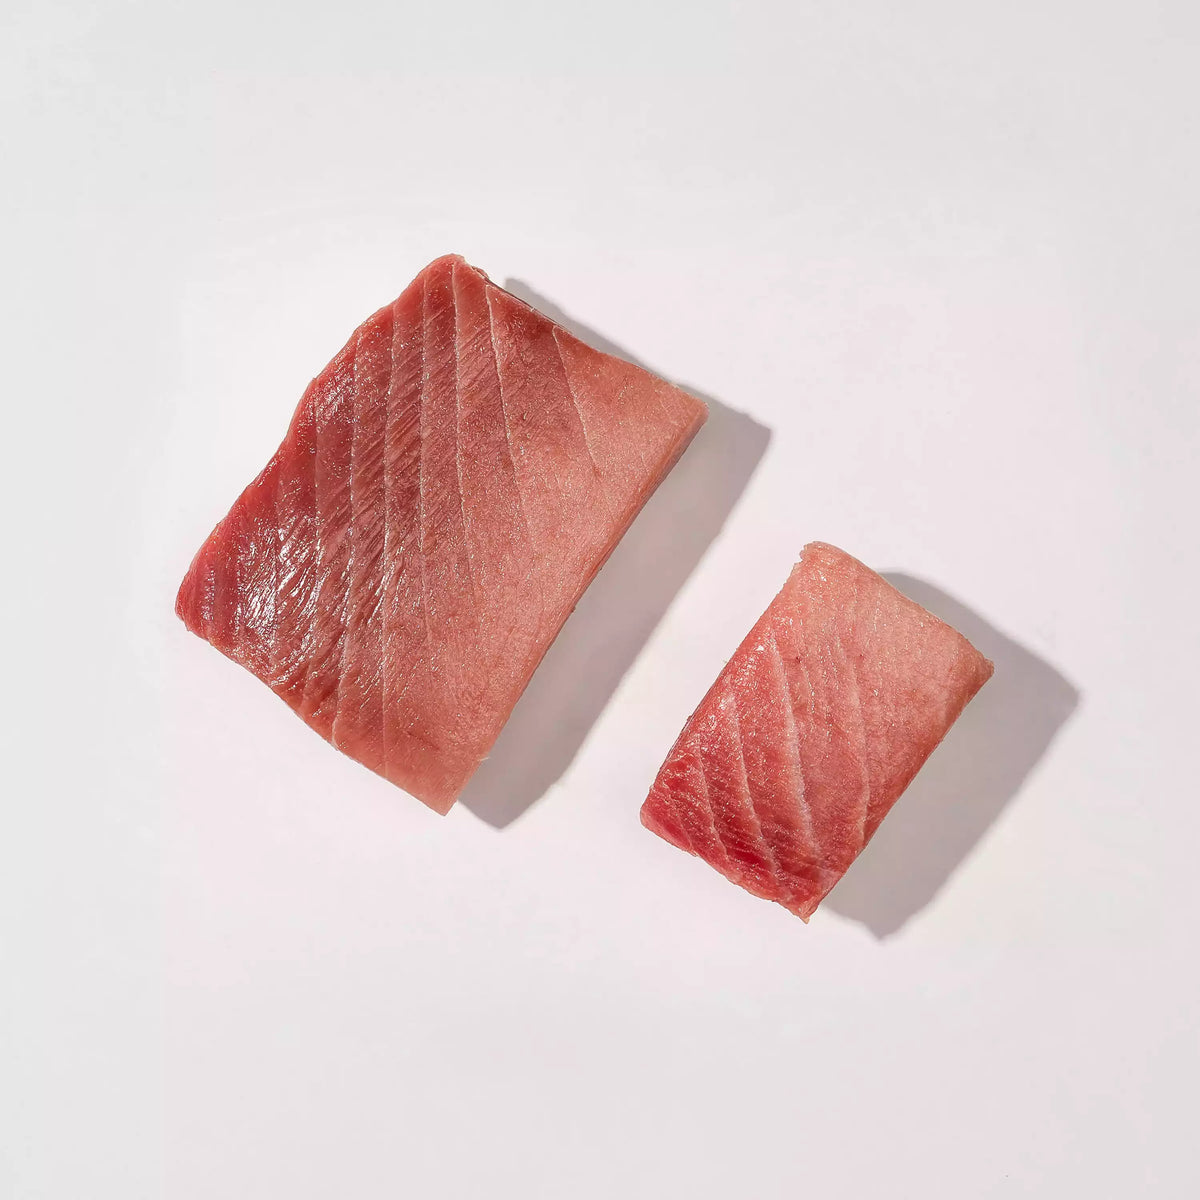 Bluefin Tuna Sashimi: Over 238 Royalty-Free Licensable Stock